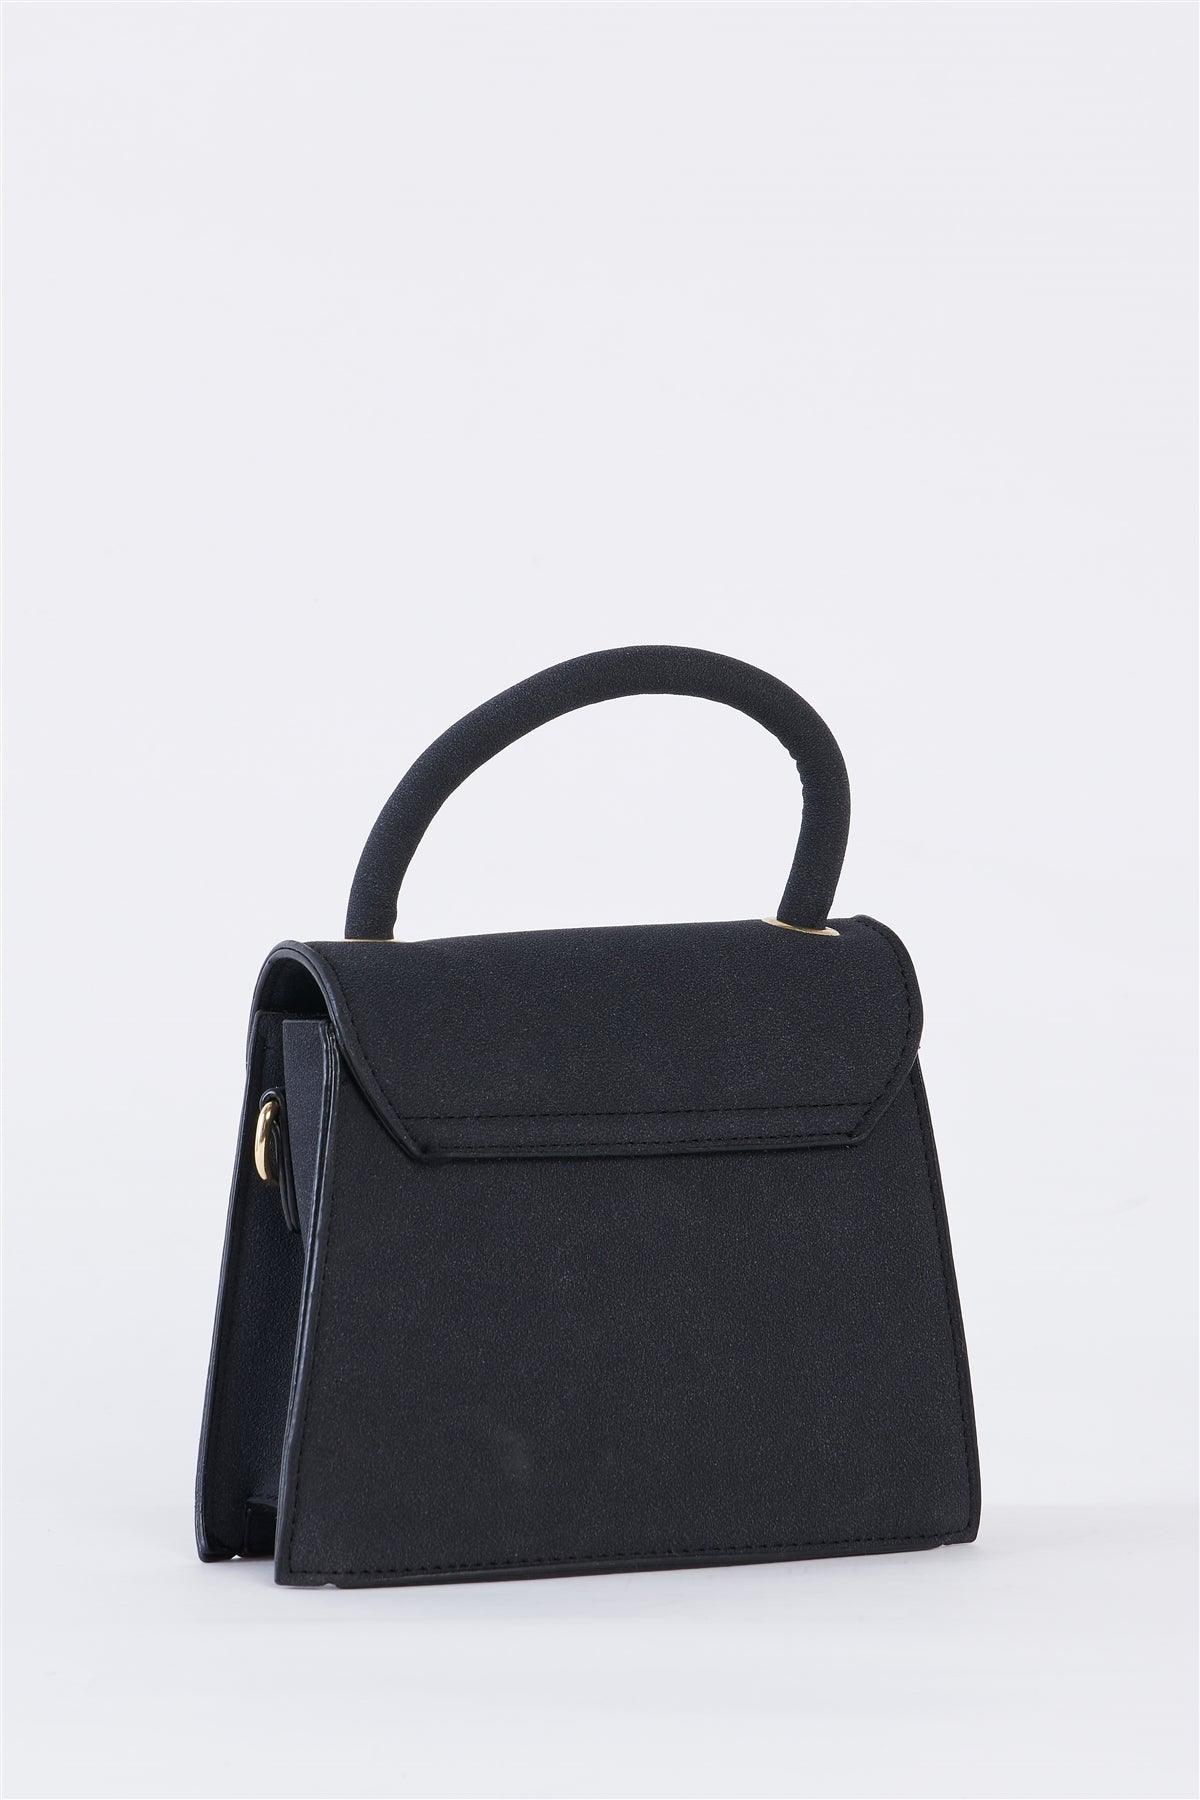 Black Vintage Inspired Purse With Gem Closure Detail /6 Bags